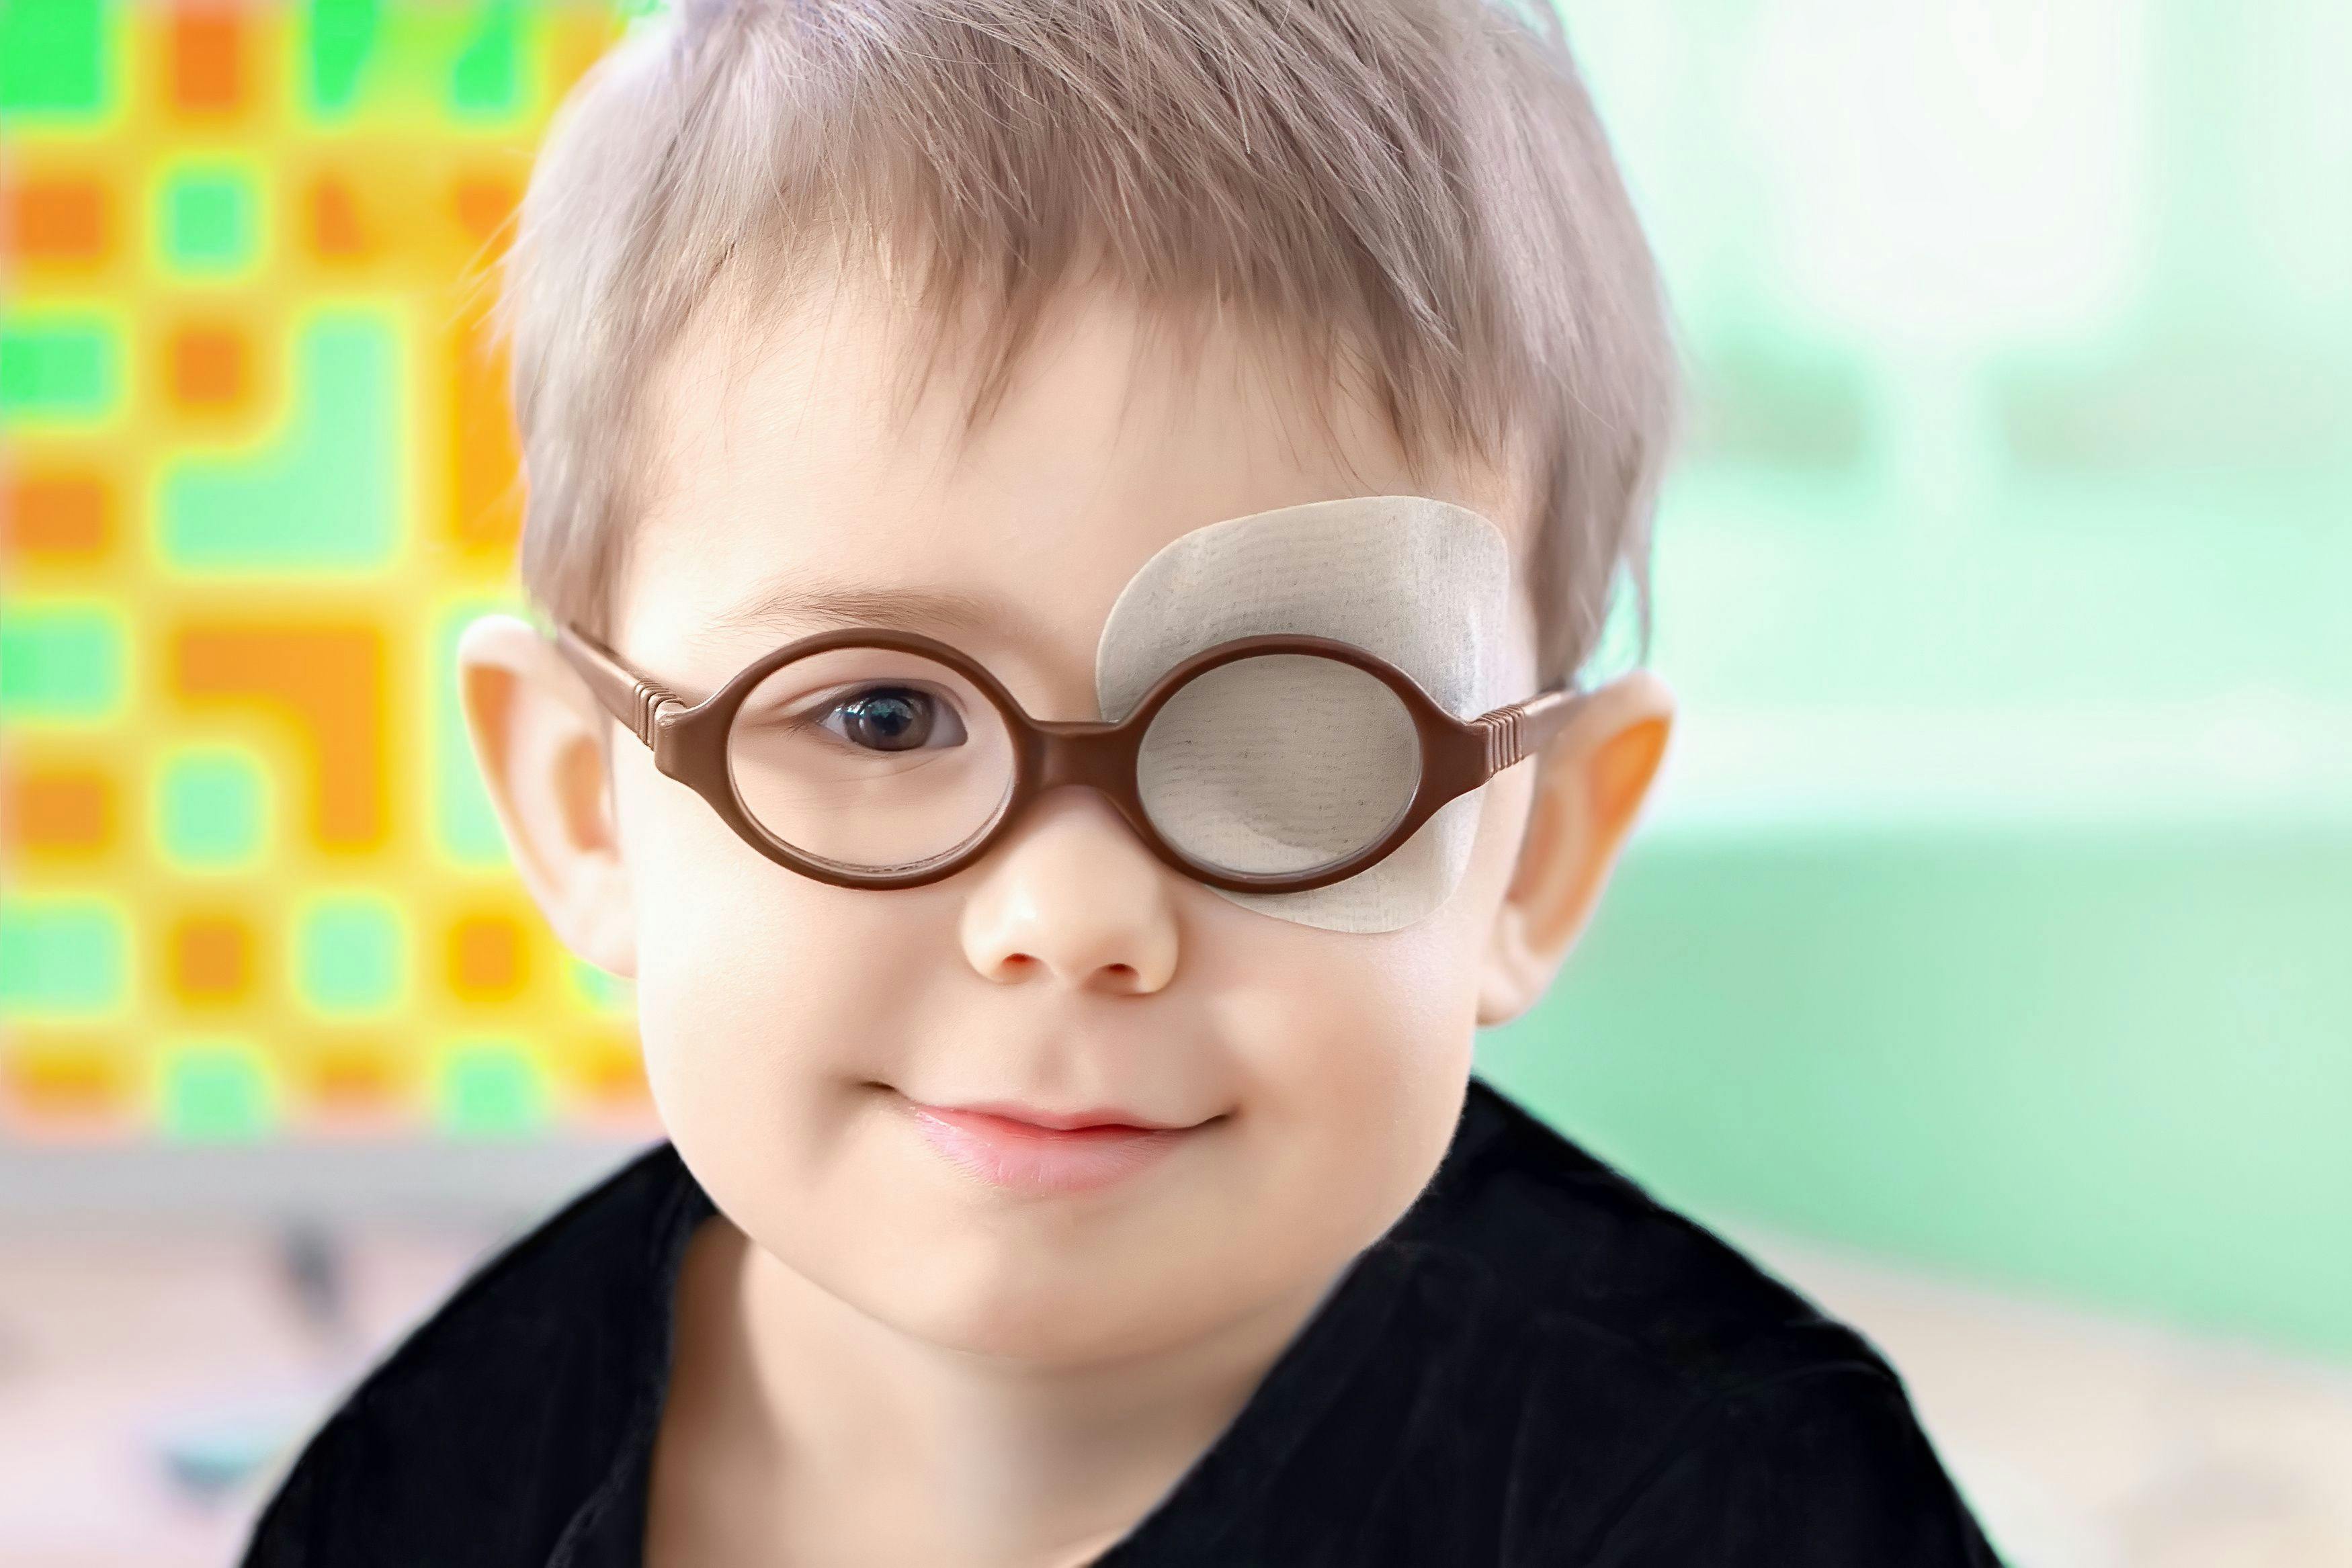 Young child with eye patch | Image credit: Maxim Kukurund - stock.adobe.com